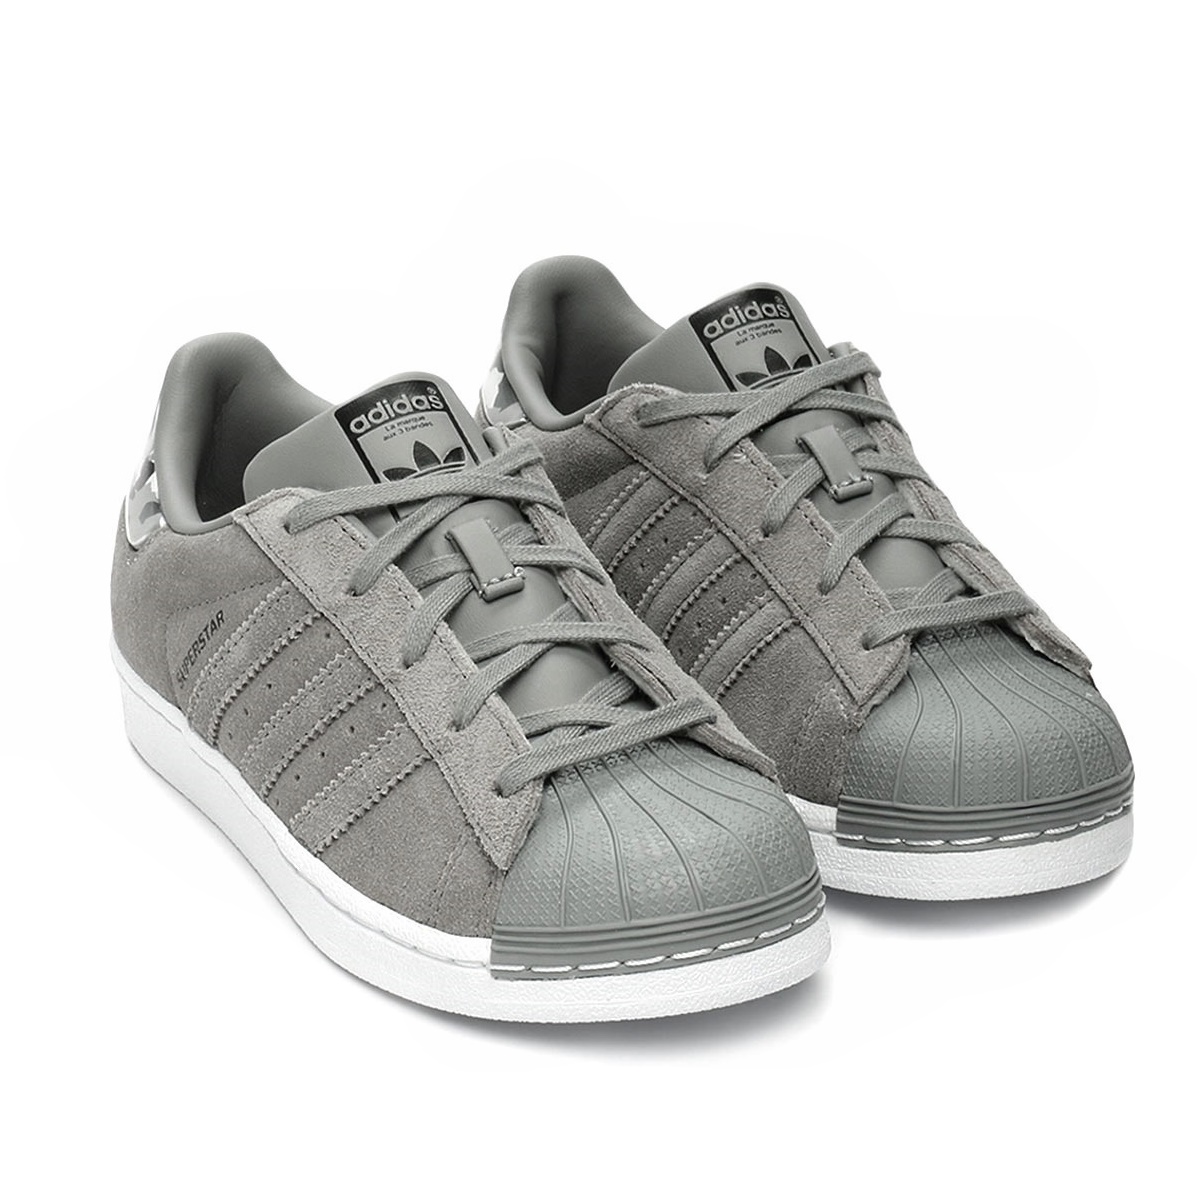 Adidas Originals Superstar Solid Grey"